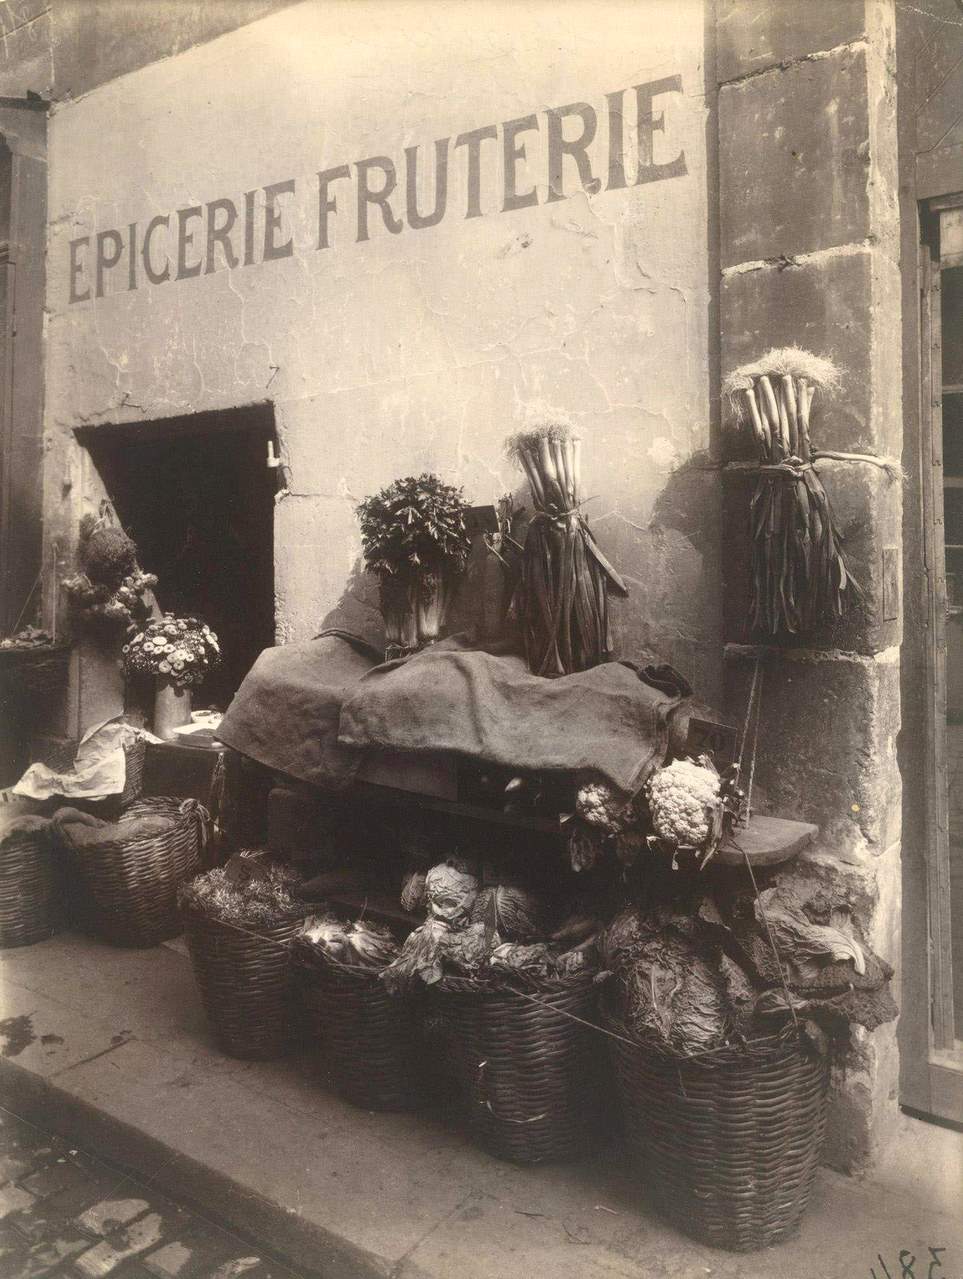 Epicerie, fruiterie, 15 rue Ma  tre-Albert in Paris, 1912